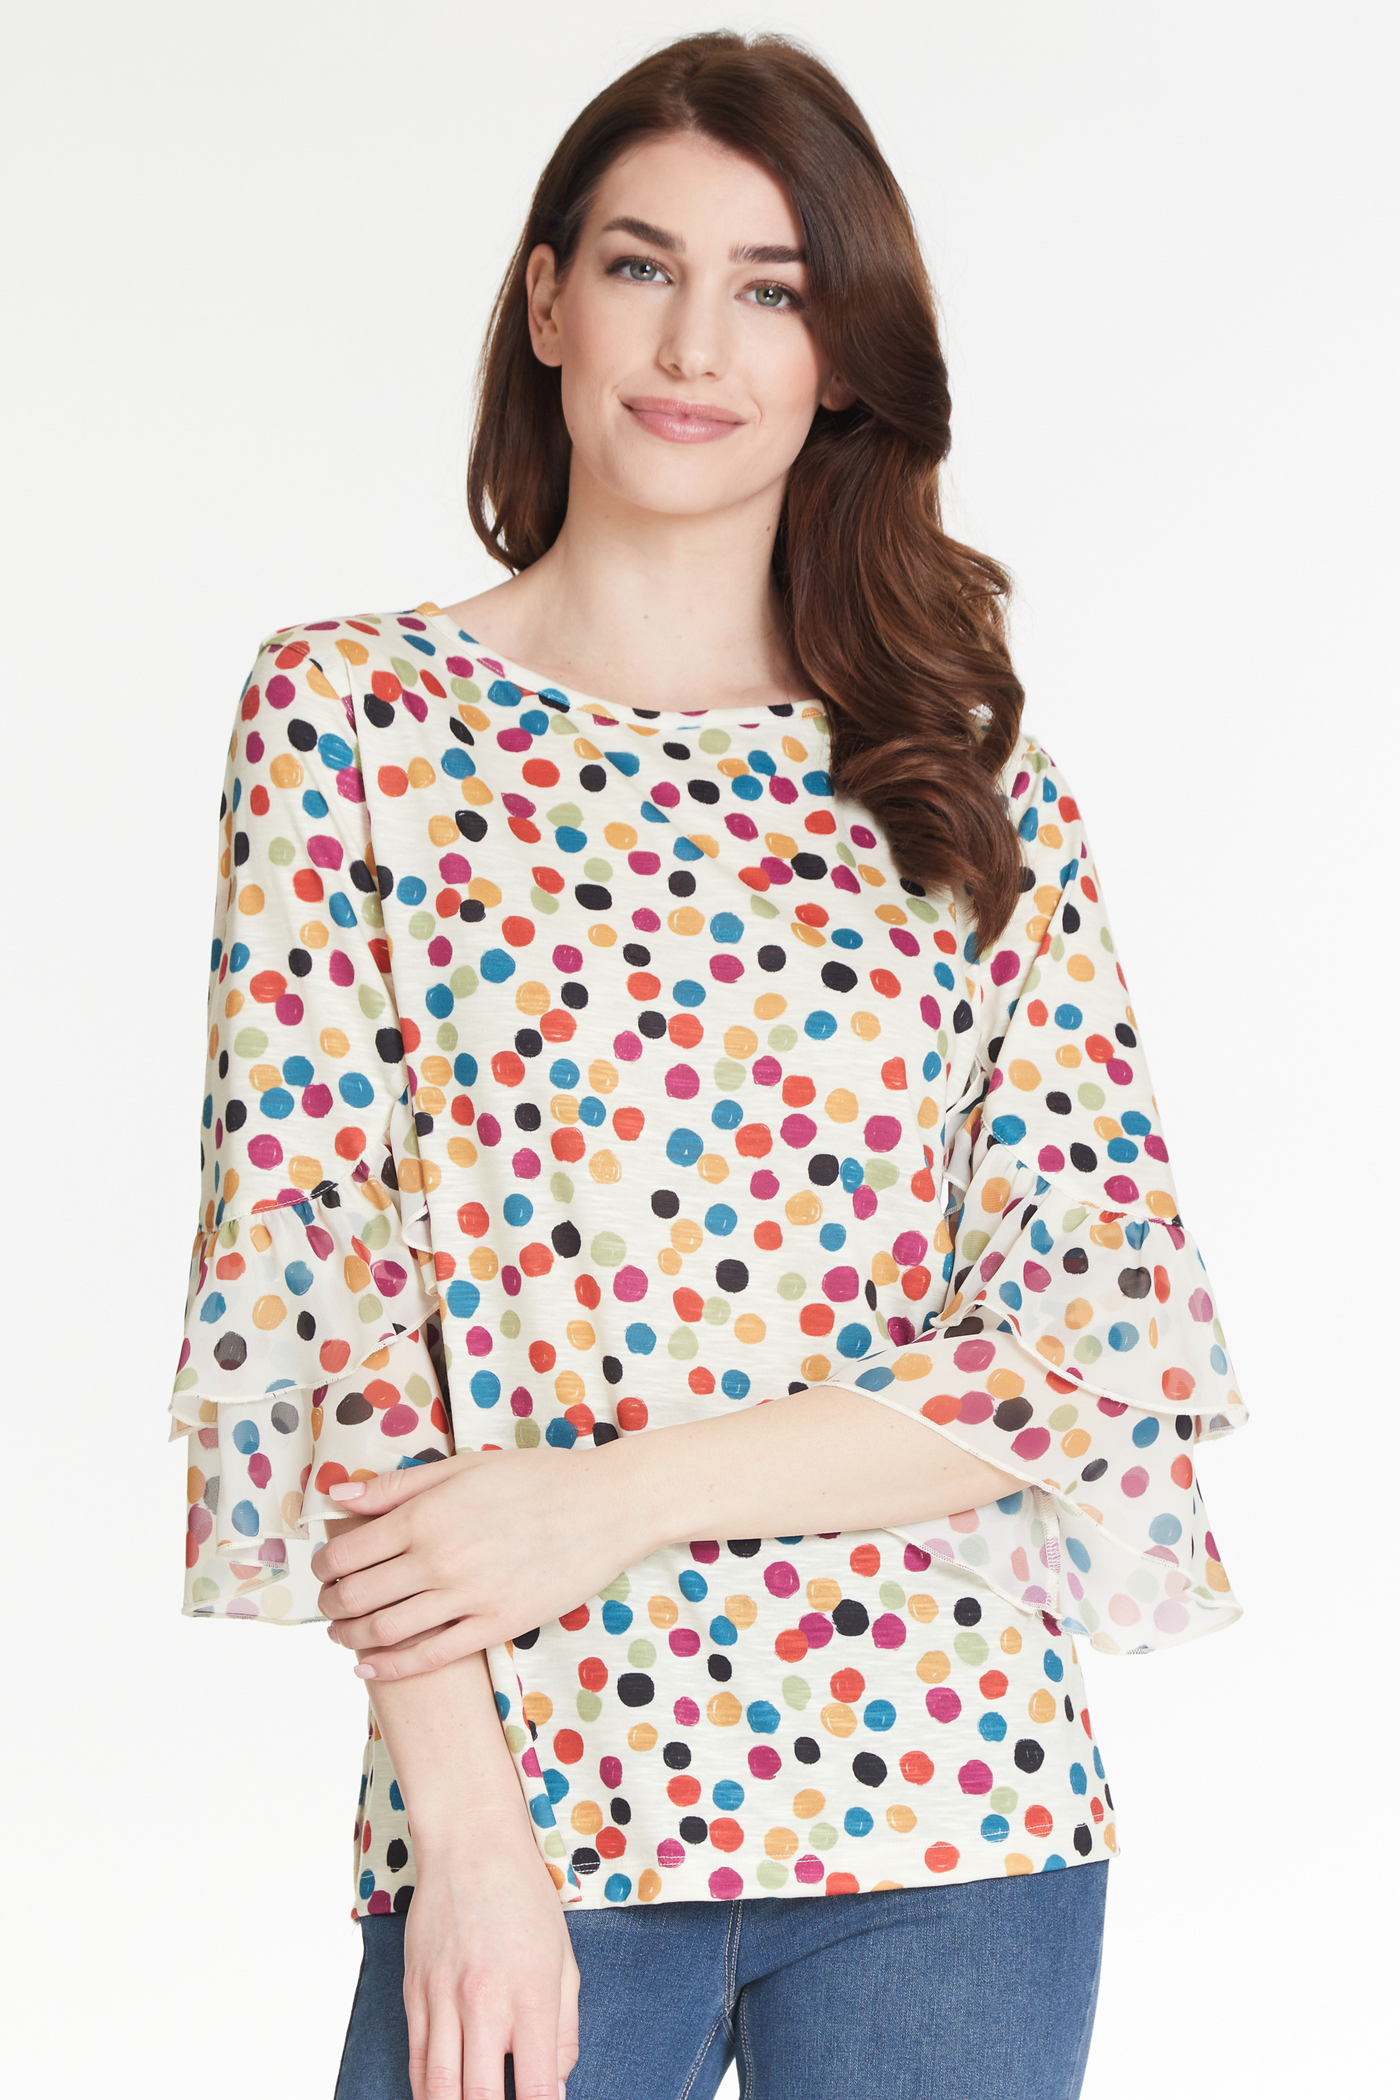 Ruffle Sleeve Knit Top - Women's - Dot Multi